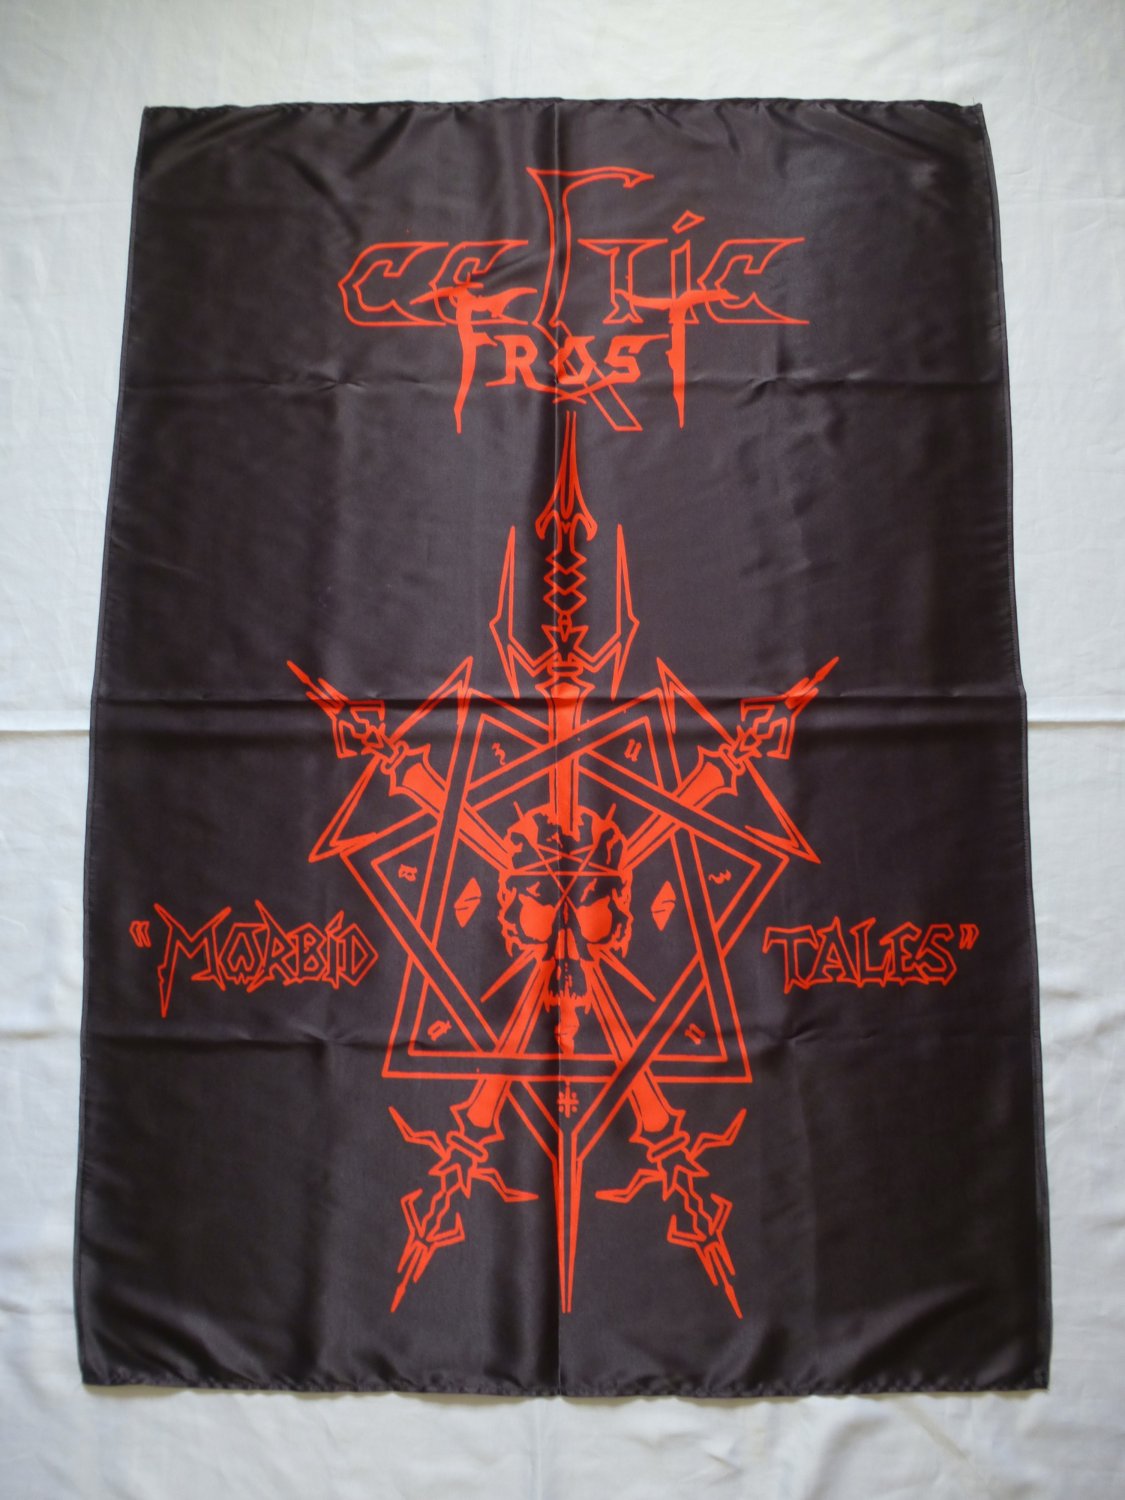 CELTIC FROST - Morbid tales FLAG cloth POSTER Banner Black METAL Hellhammer